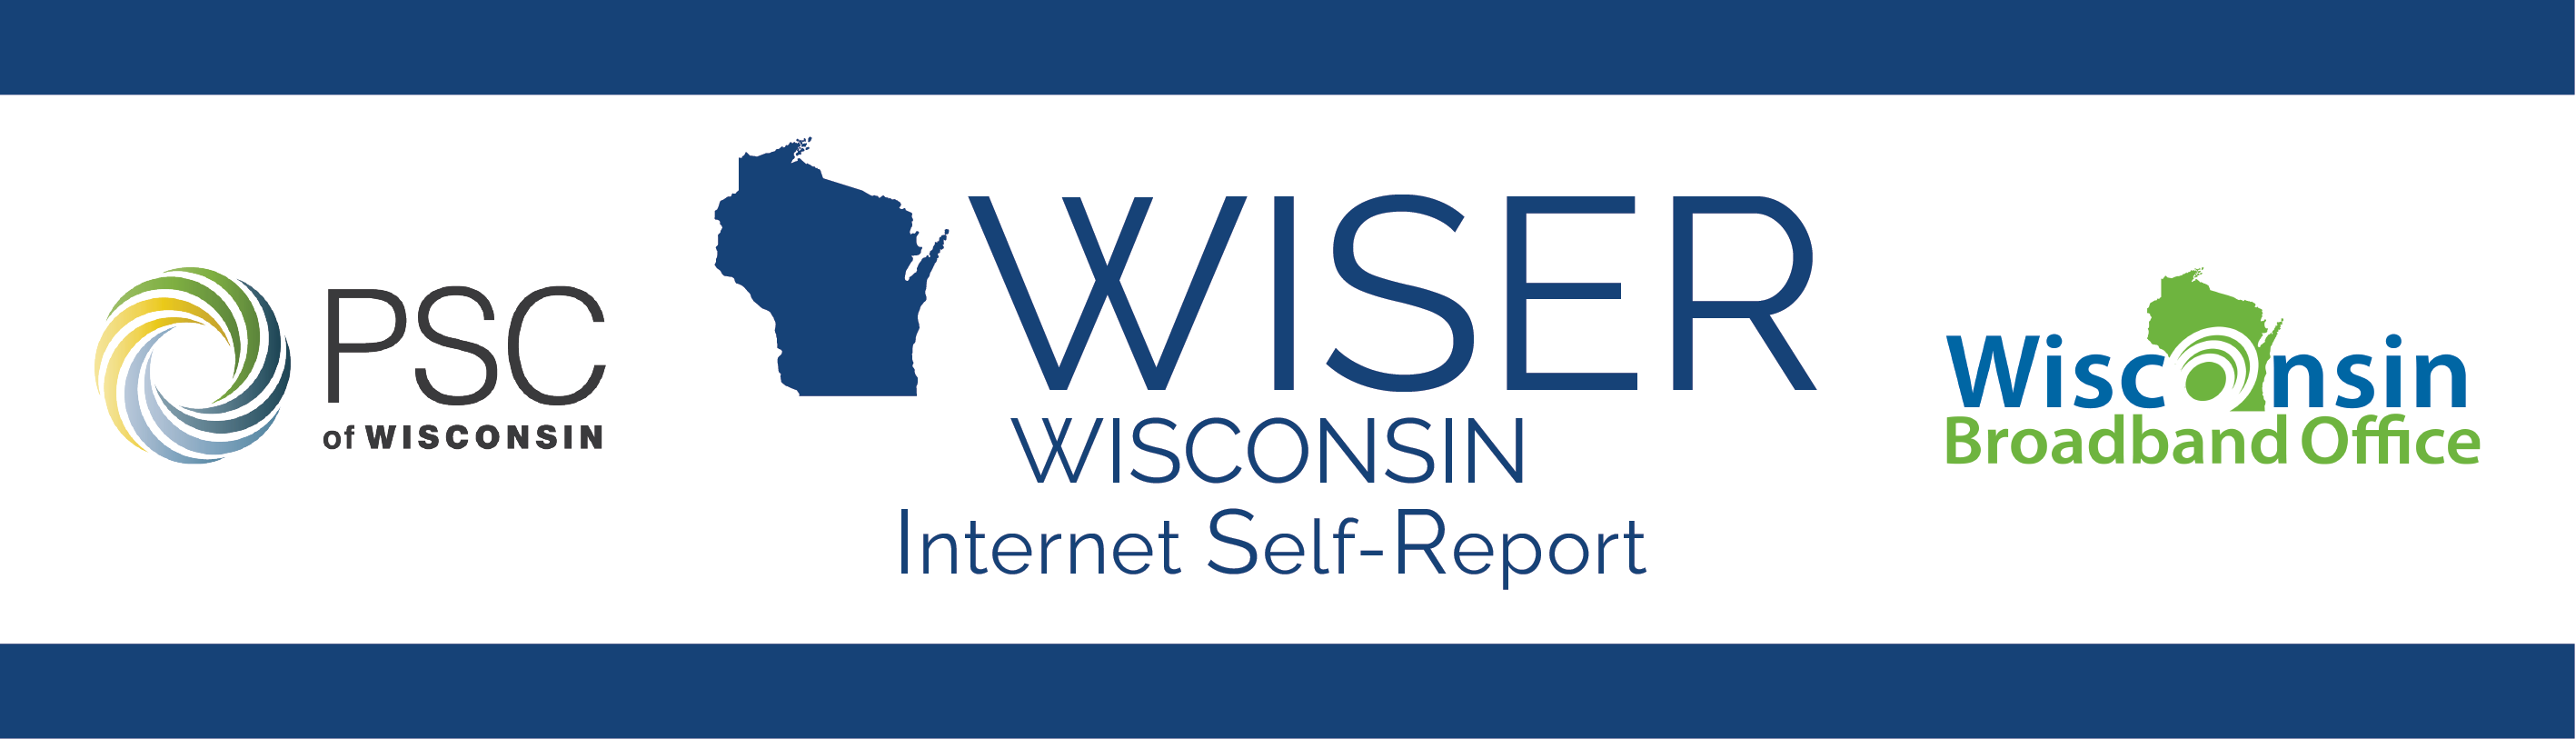 WISER Wisconsin Internet Self-Report and Wisconsin Partner Logos